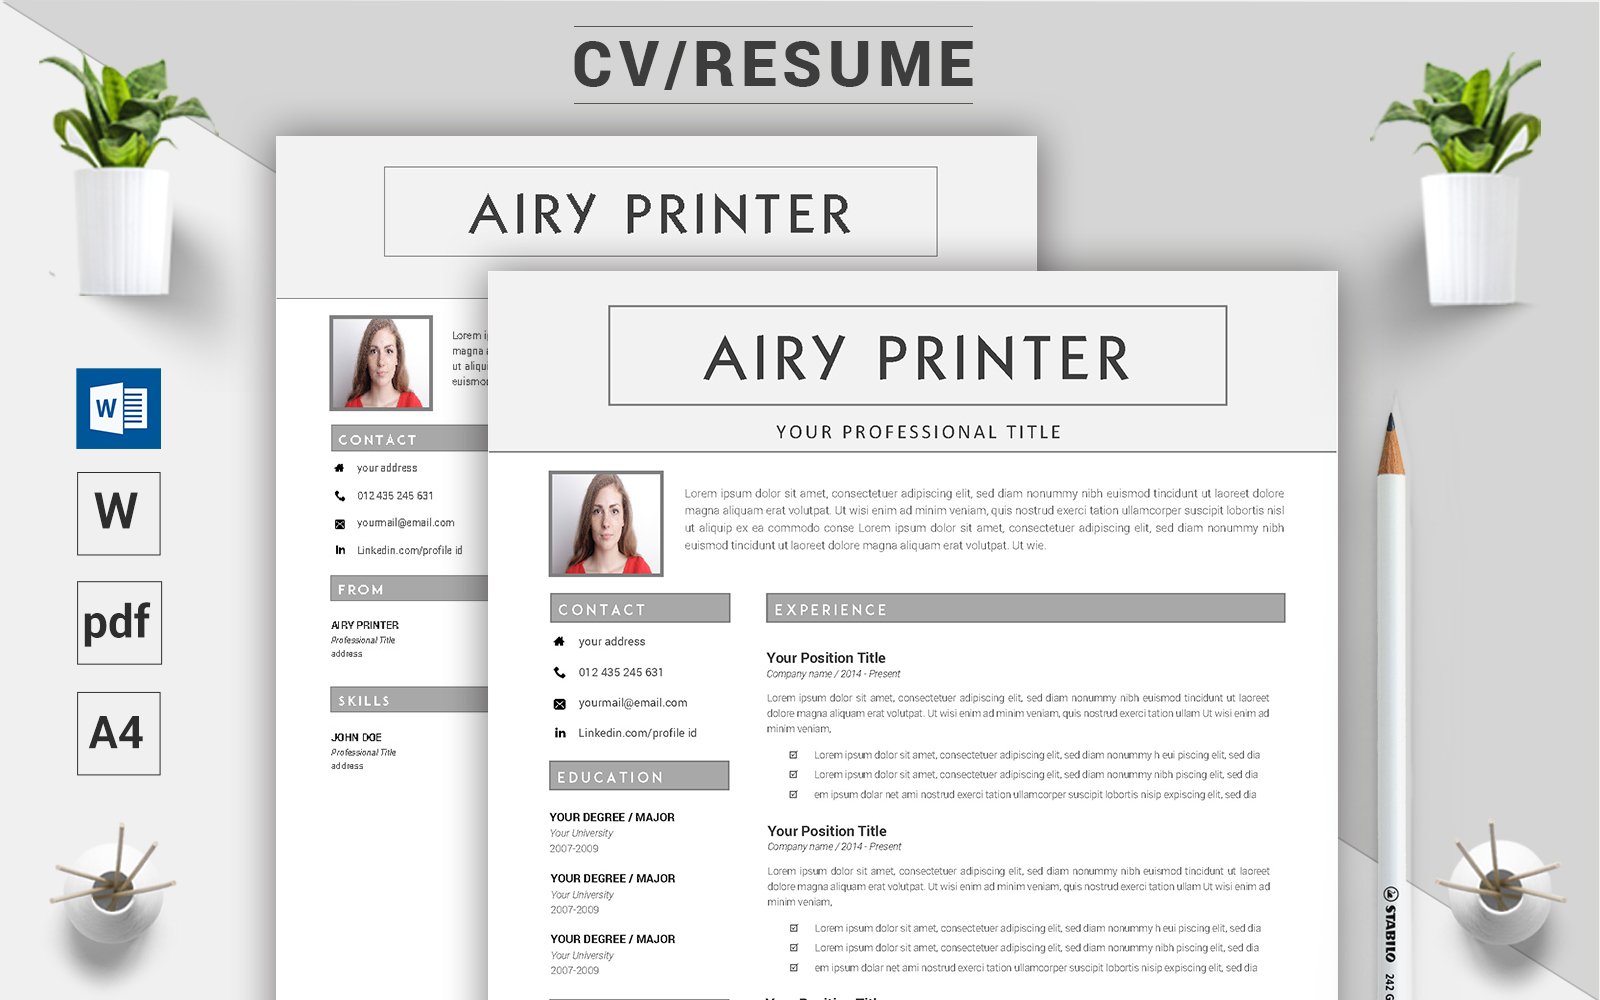 Airy Printer - CV Resume Template